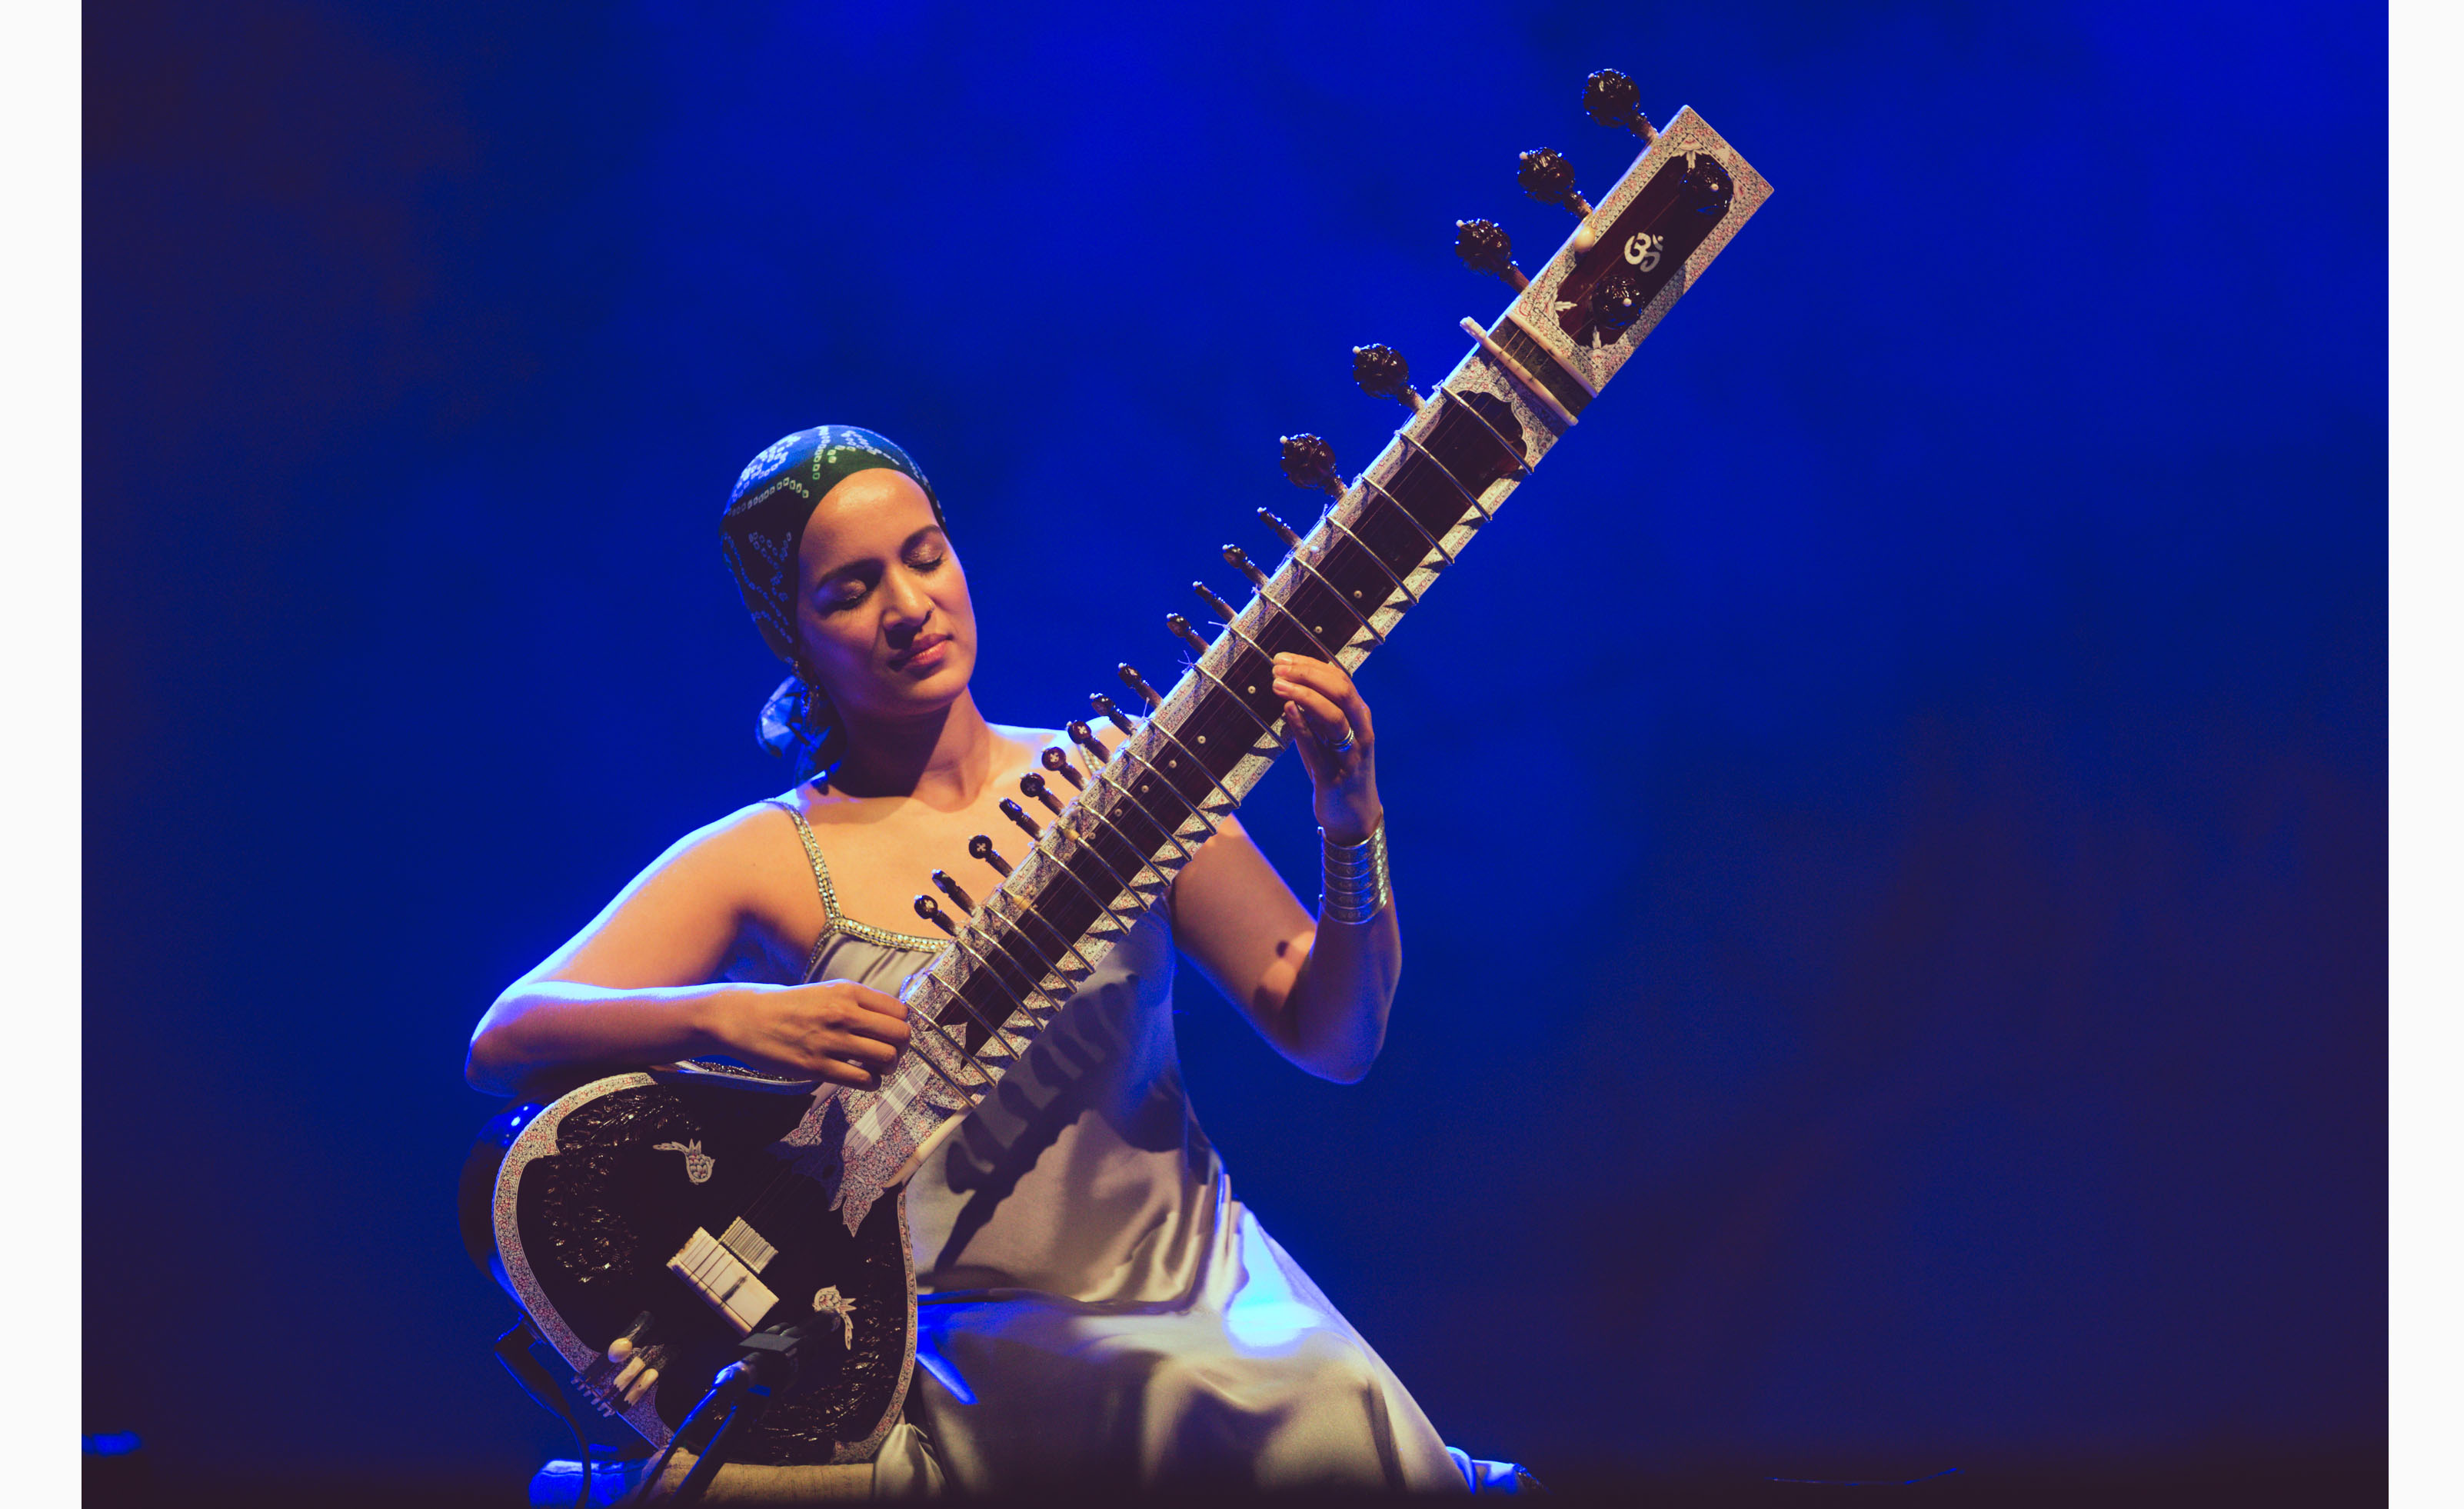  Anoushka Shankar performance on Day 3 of Bacardi NH7 Weekender Pune. Photo Credit - Himanshu Rohilla